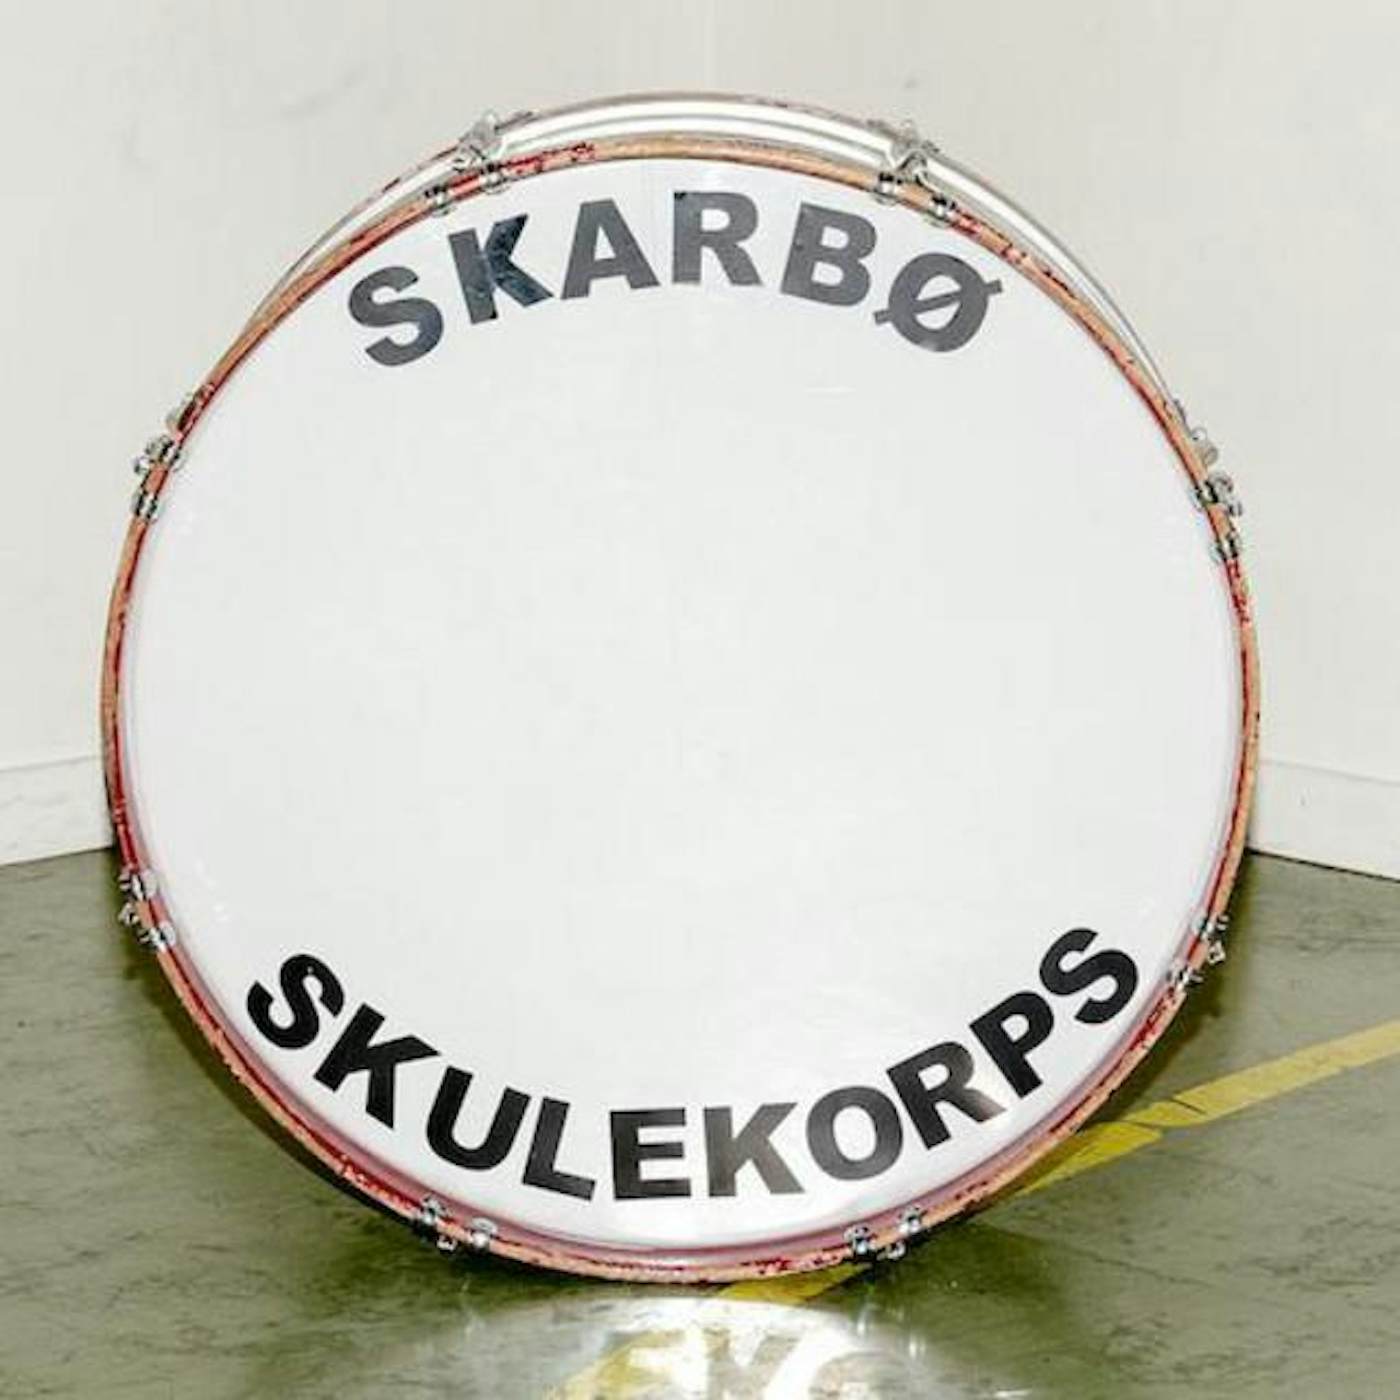 Skarbø Skulekorps